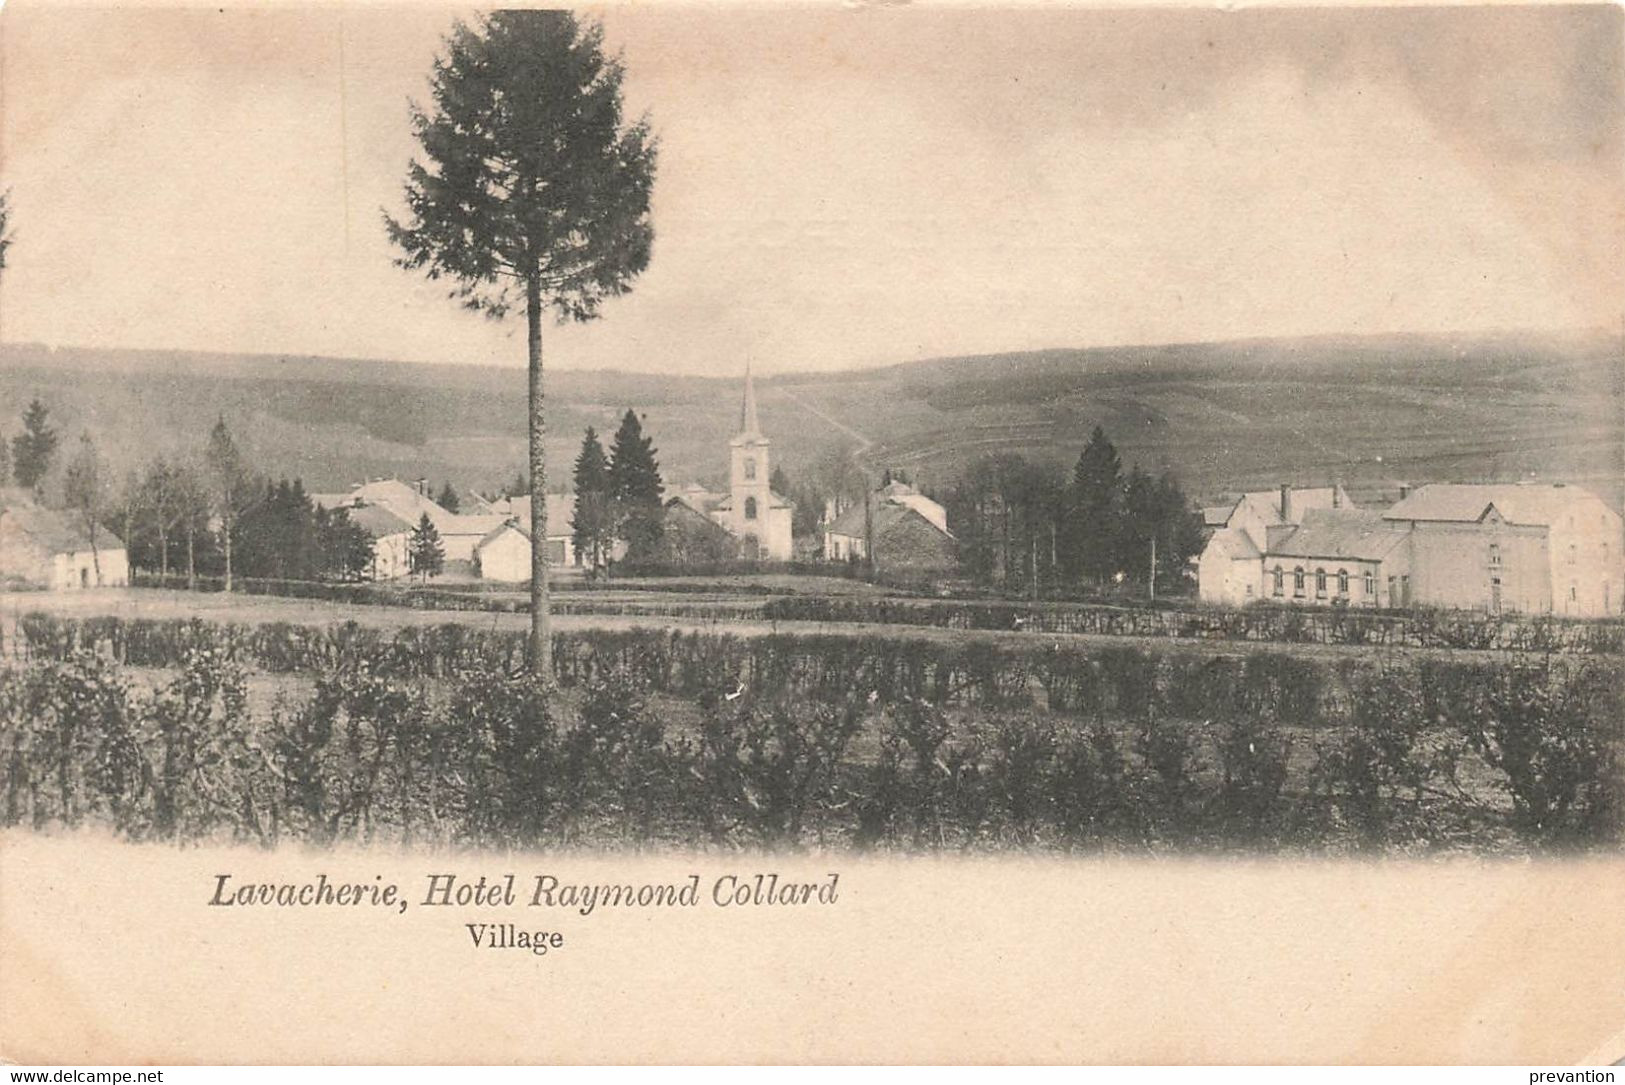 LAVACHERIE, Hôtel Raymond Collard - Village - Carte Circulé En 1907 - Sainte-Ode